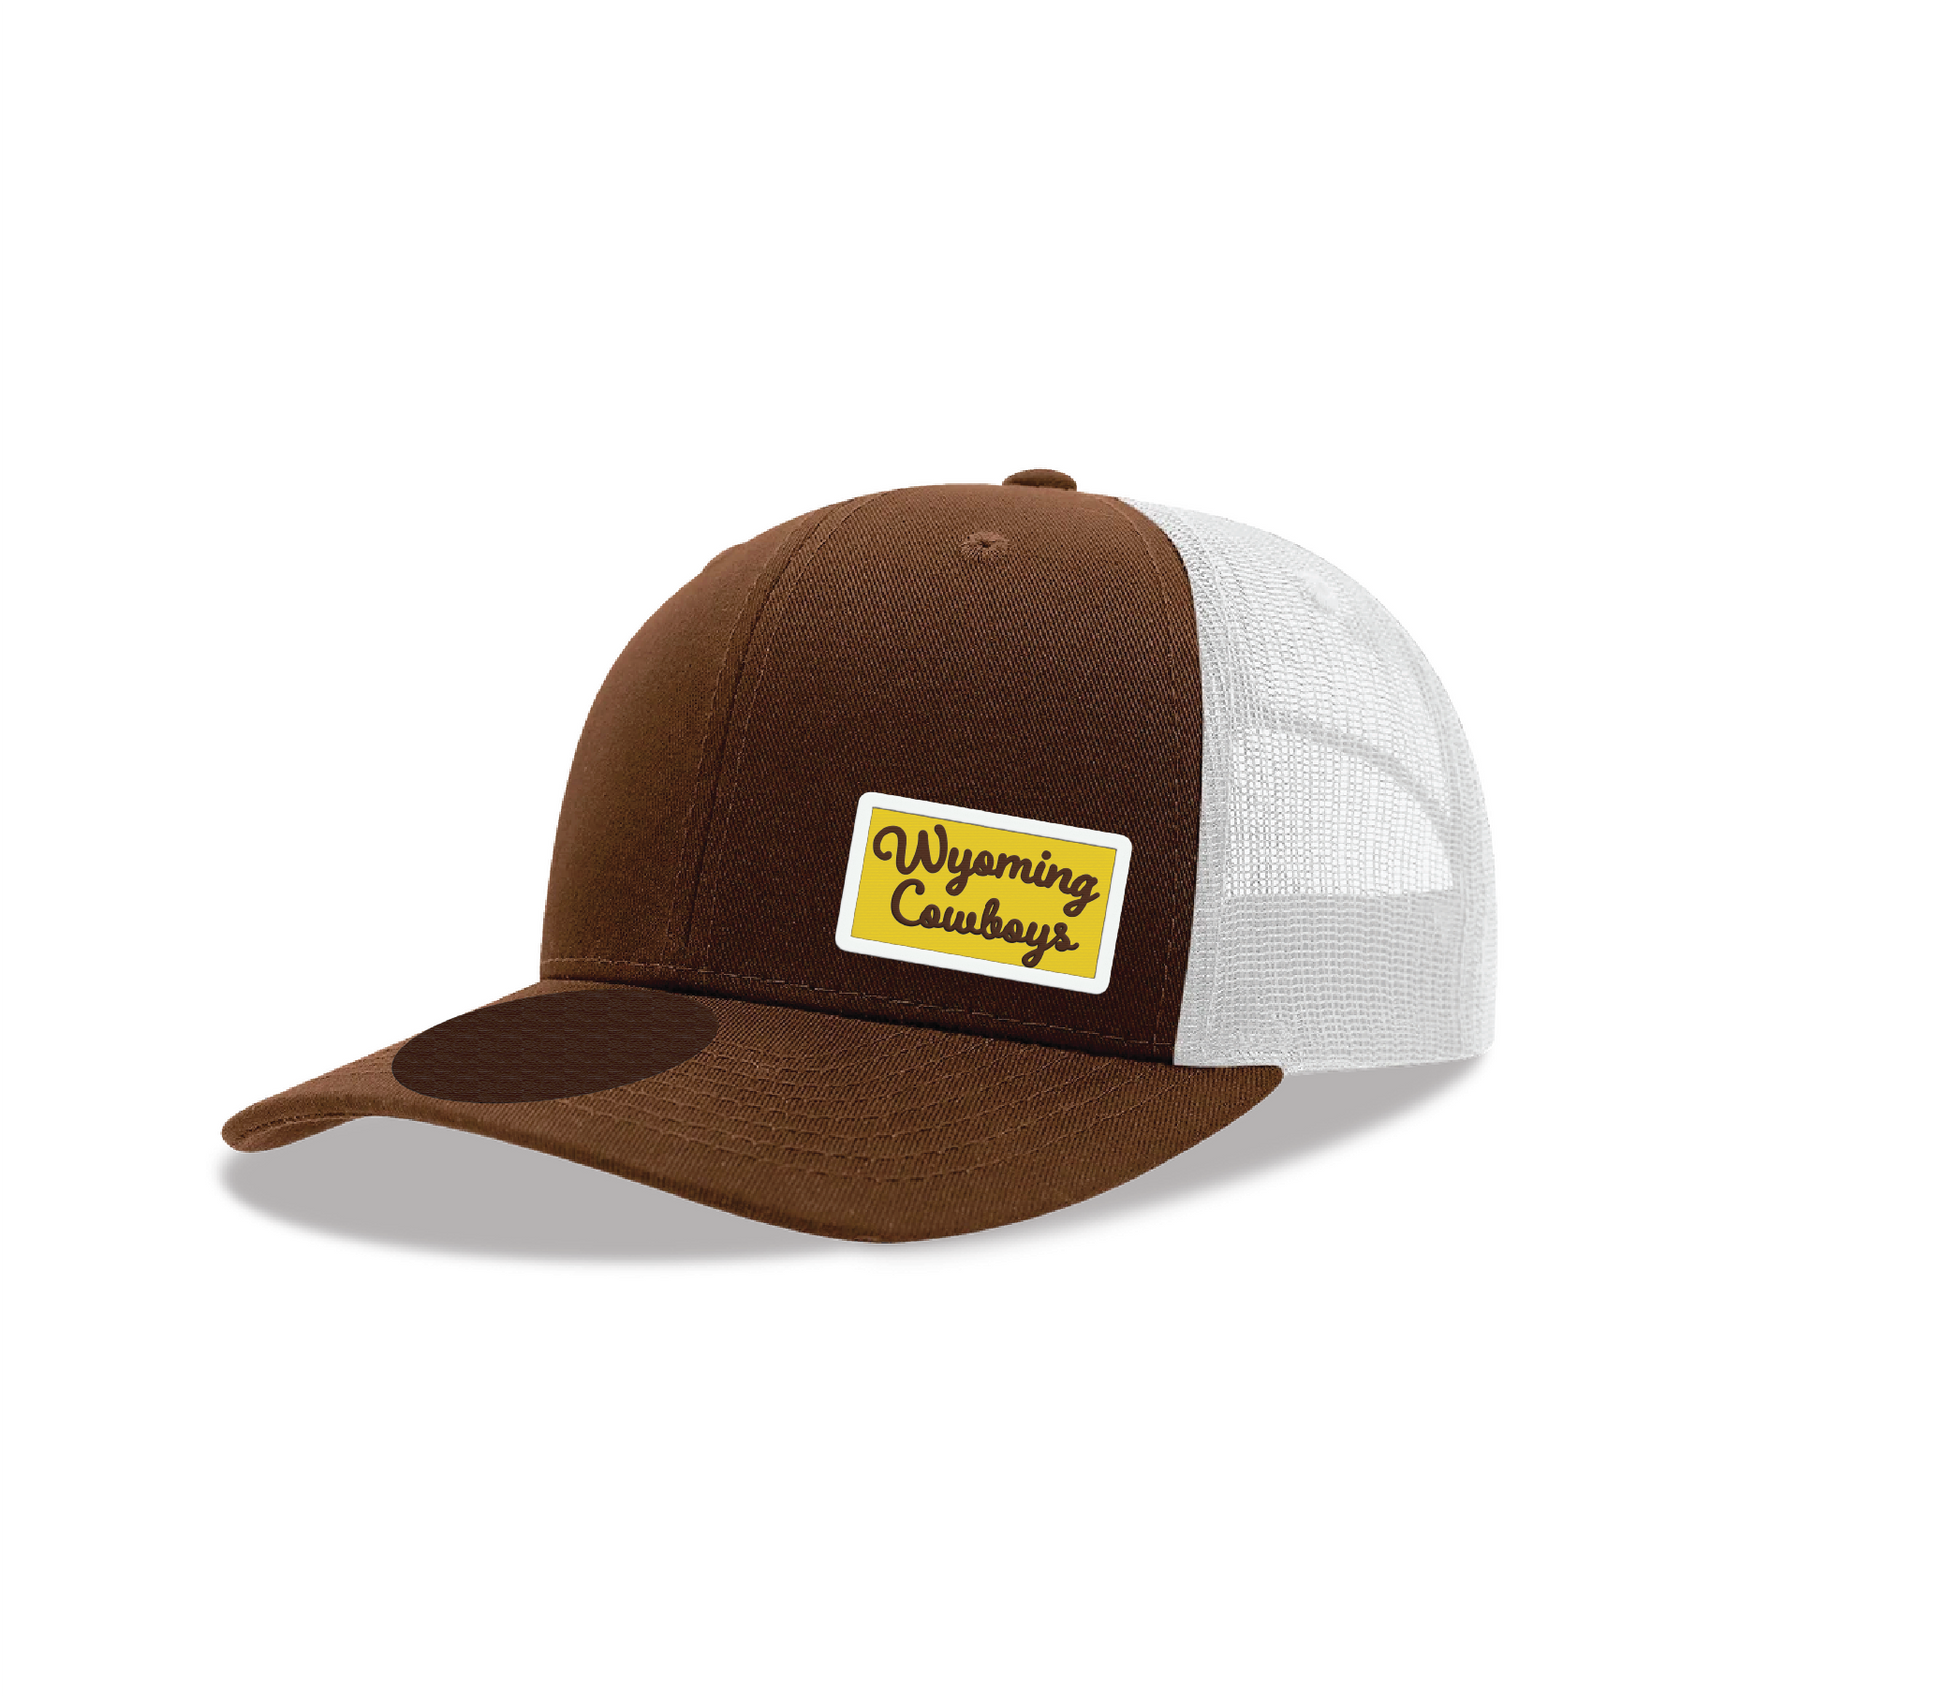 Wyoming Cowboys New Era 5950 Hat - Stone Walnut